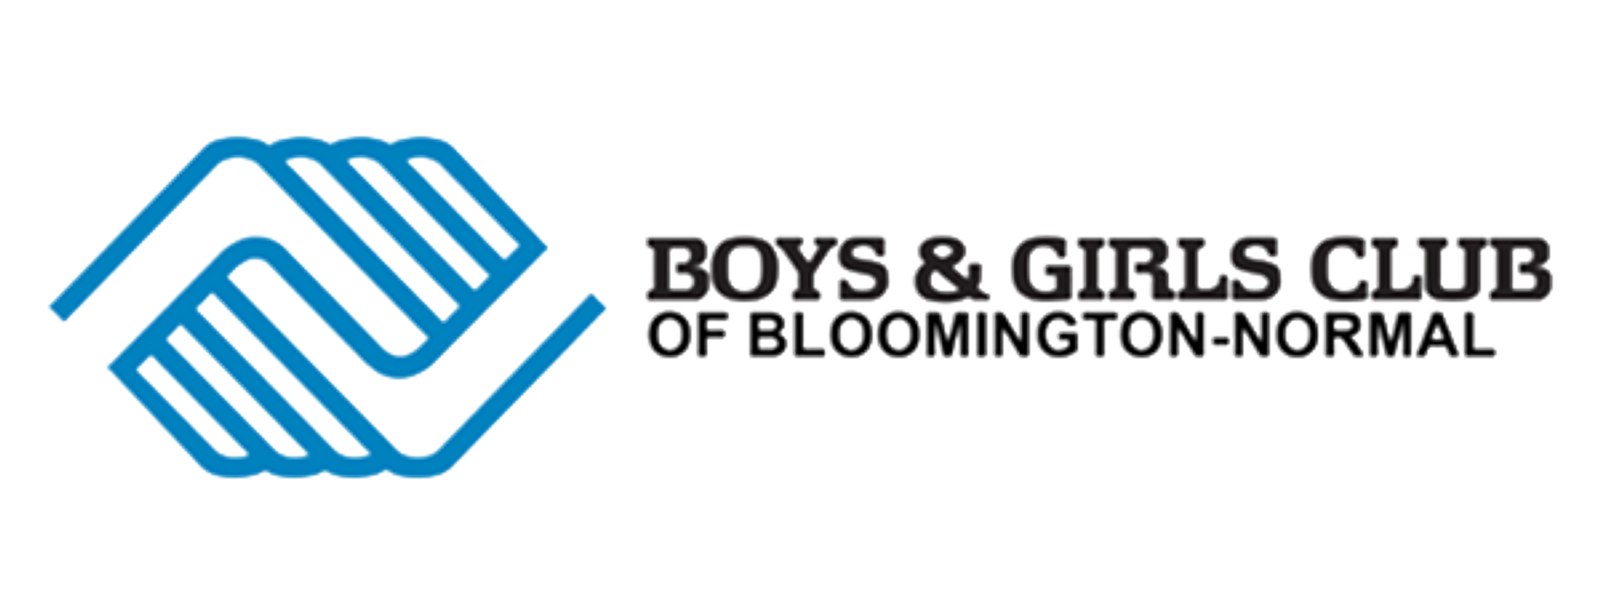 Boys & Girls Club of Bloomington-Normal